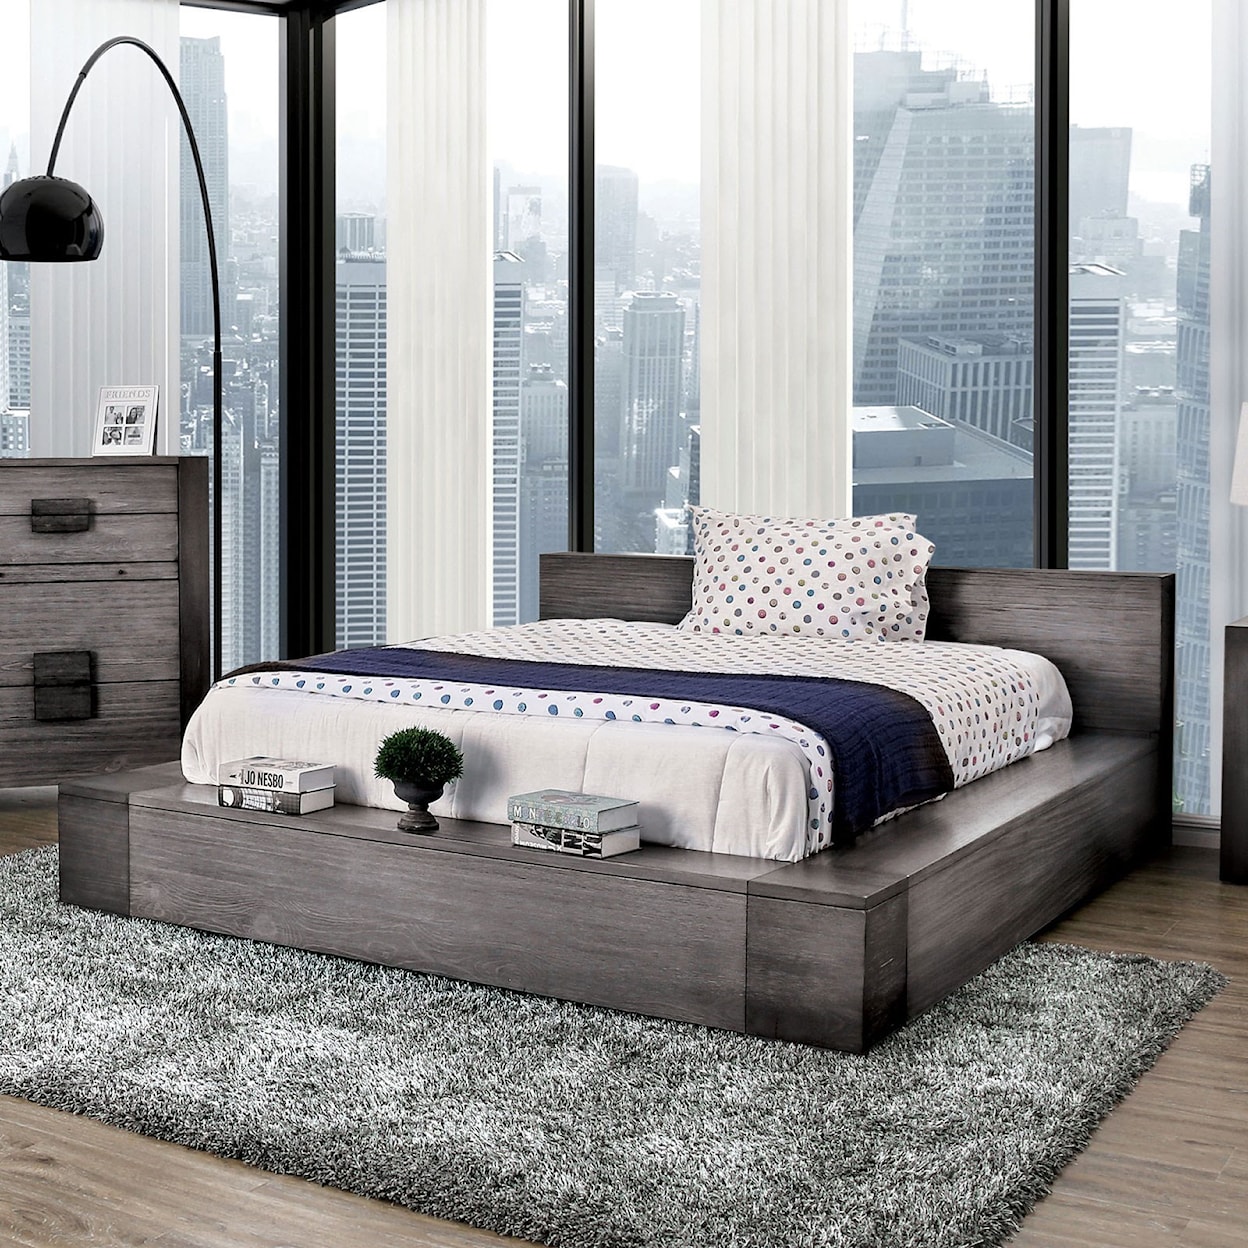 FUSA Janeiro King Bed